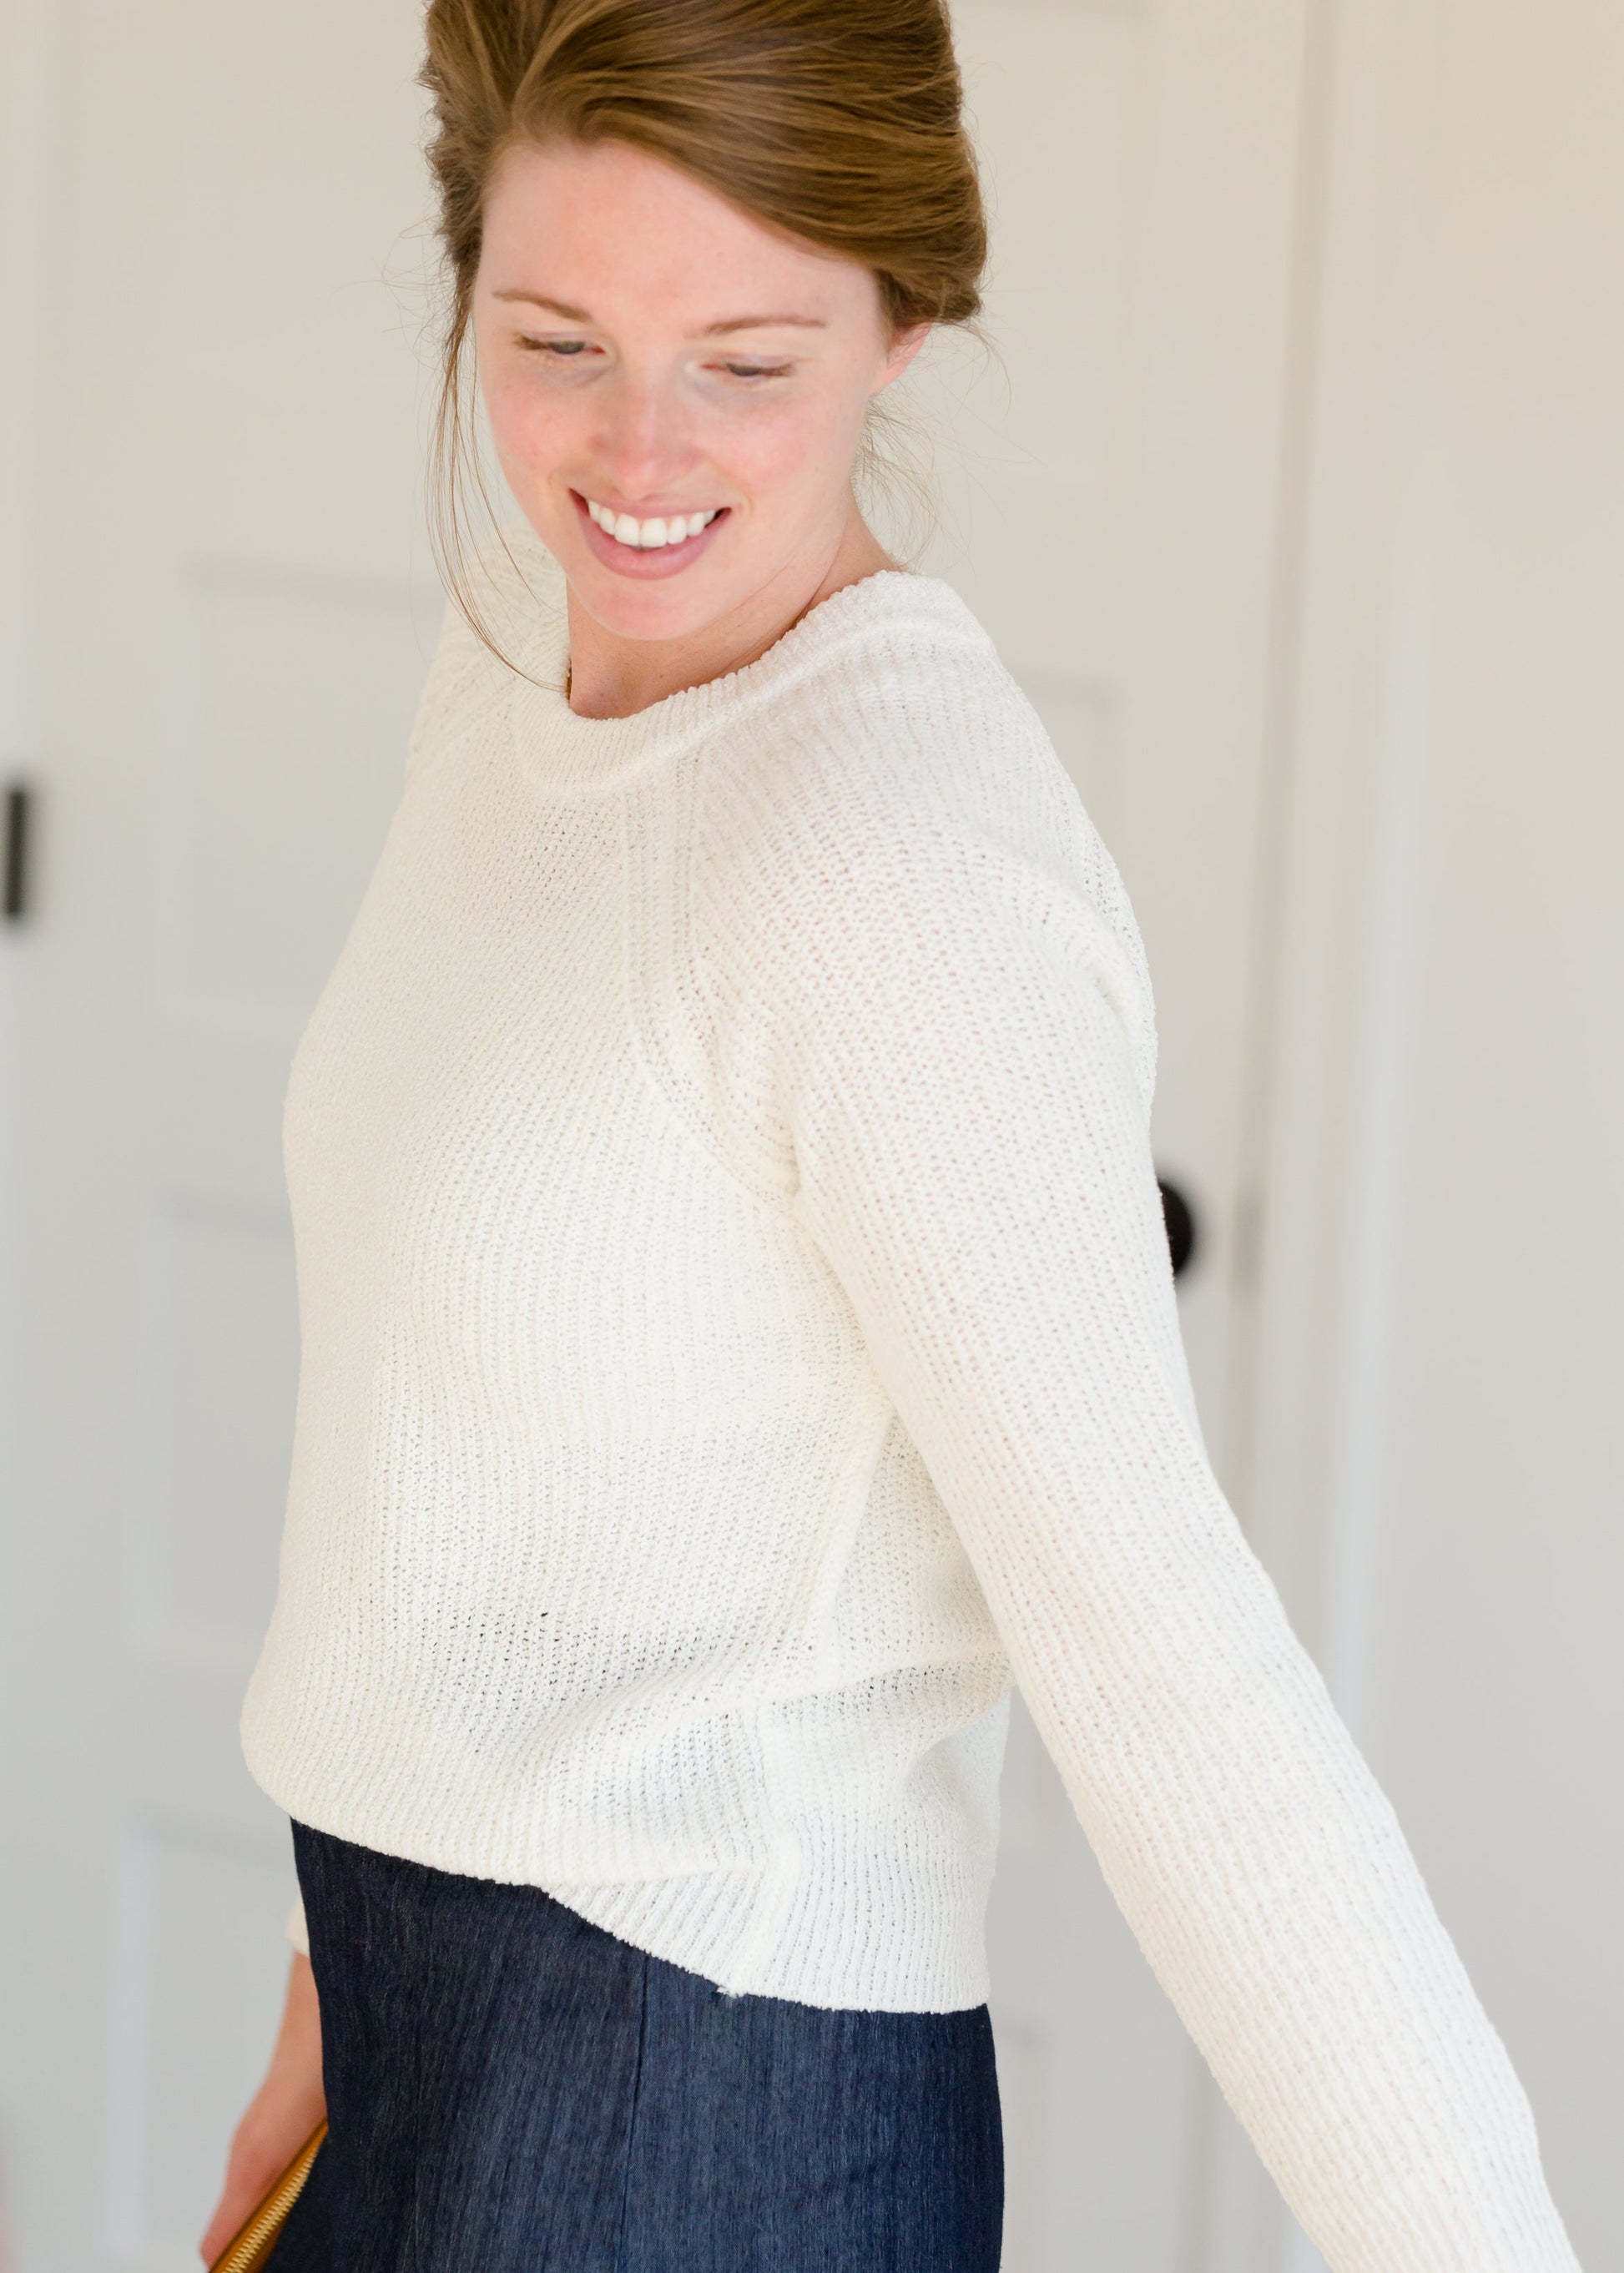 Sheer Knit Crewneck Sweater - FINAL SALE Tops